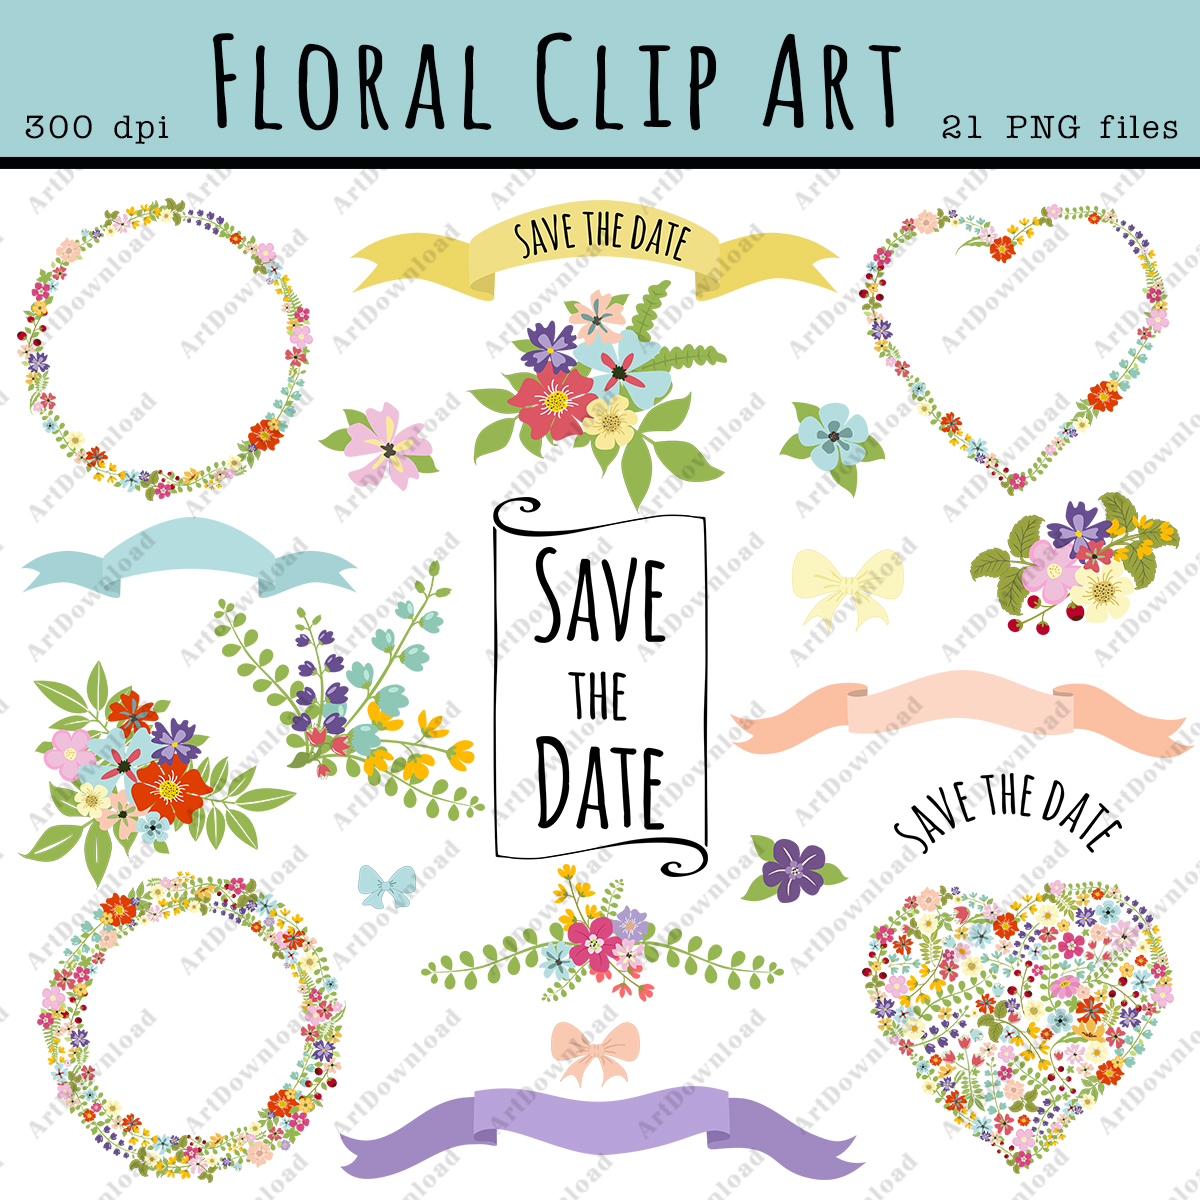 Digital Floral Clip Art - Clip Art Wedding, Flowers Wreath , Ribbon , Floral hearts, Bouquets, Wedding invitation